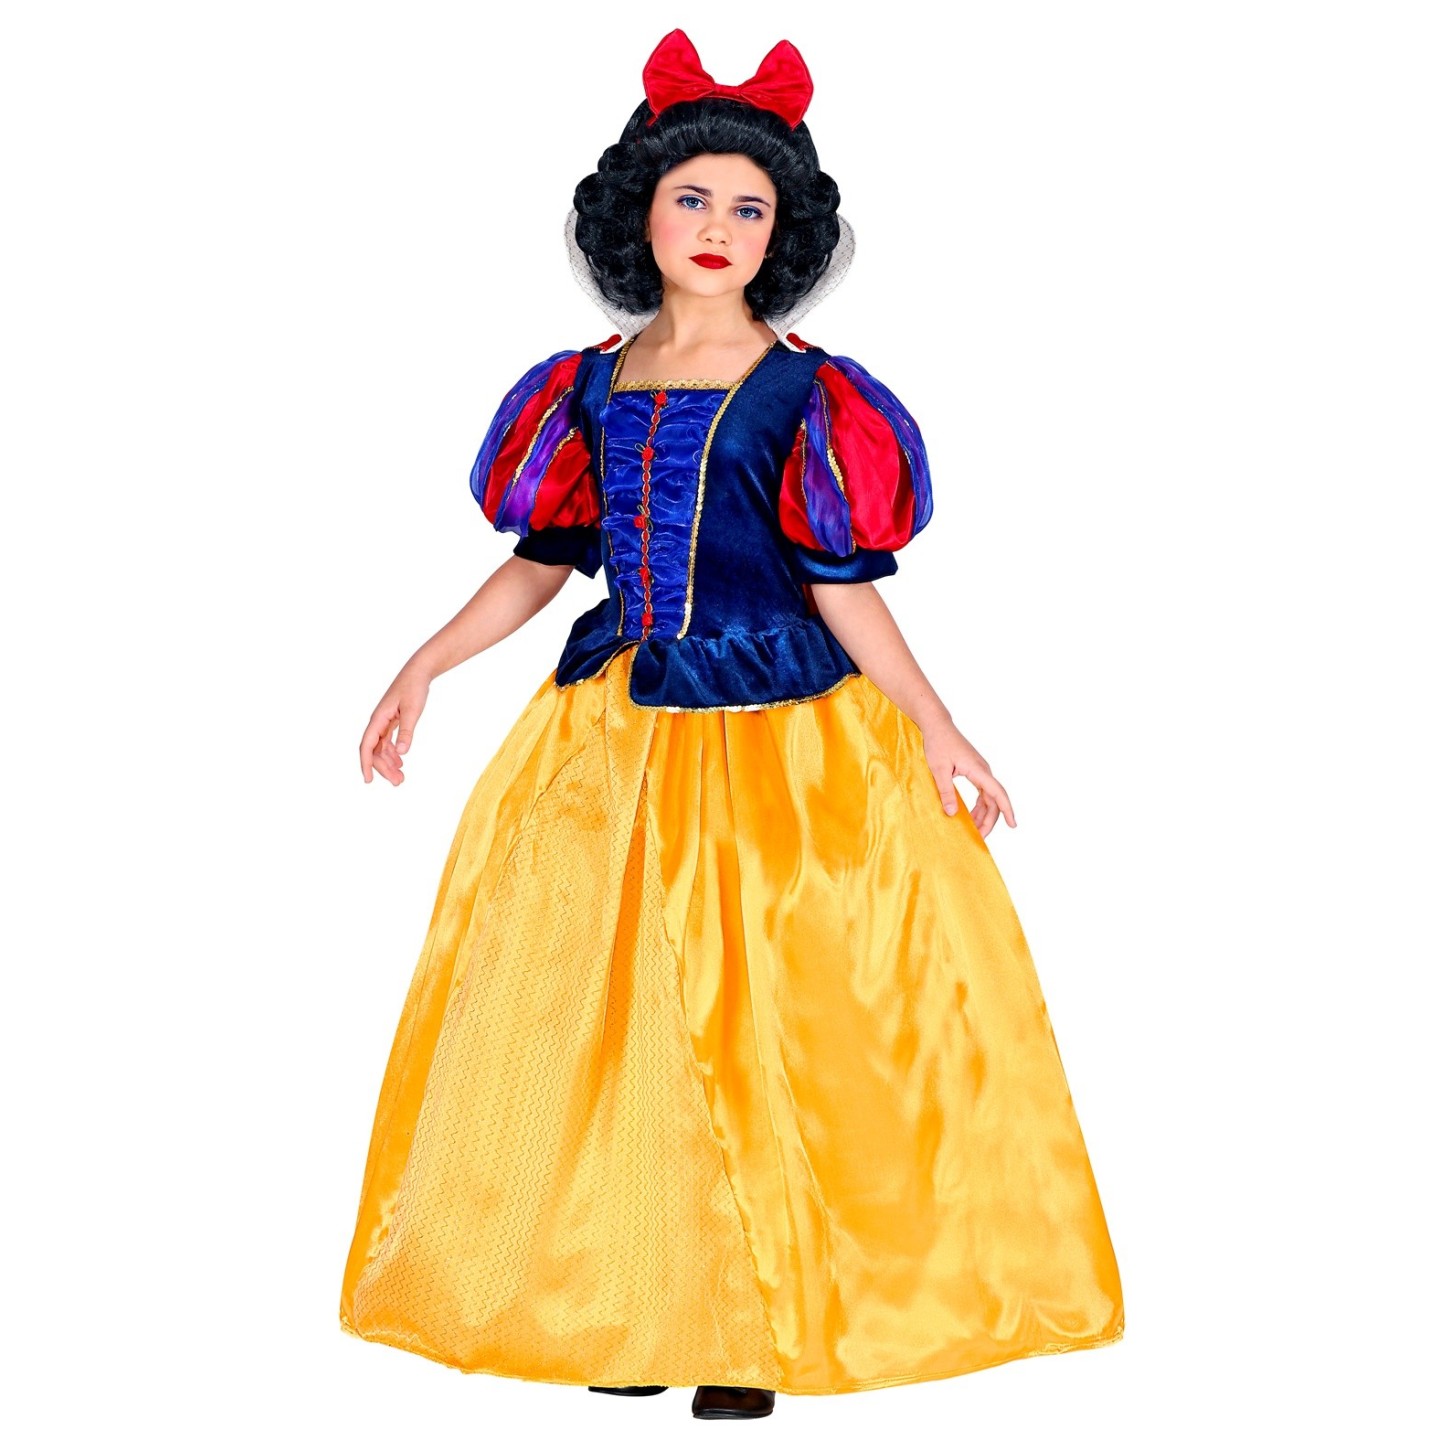 Verborgen roddel Tolk Sneeuwwitje kostuum kind | Jokershop.be - Disney verkleedkleding